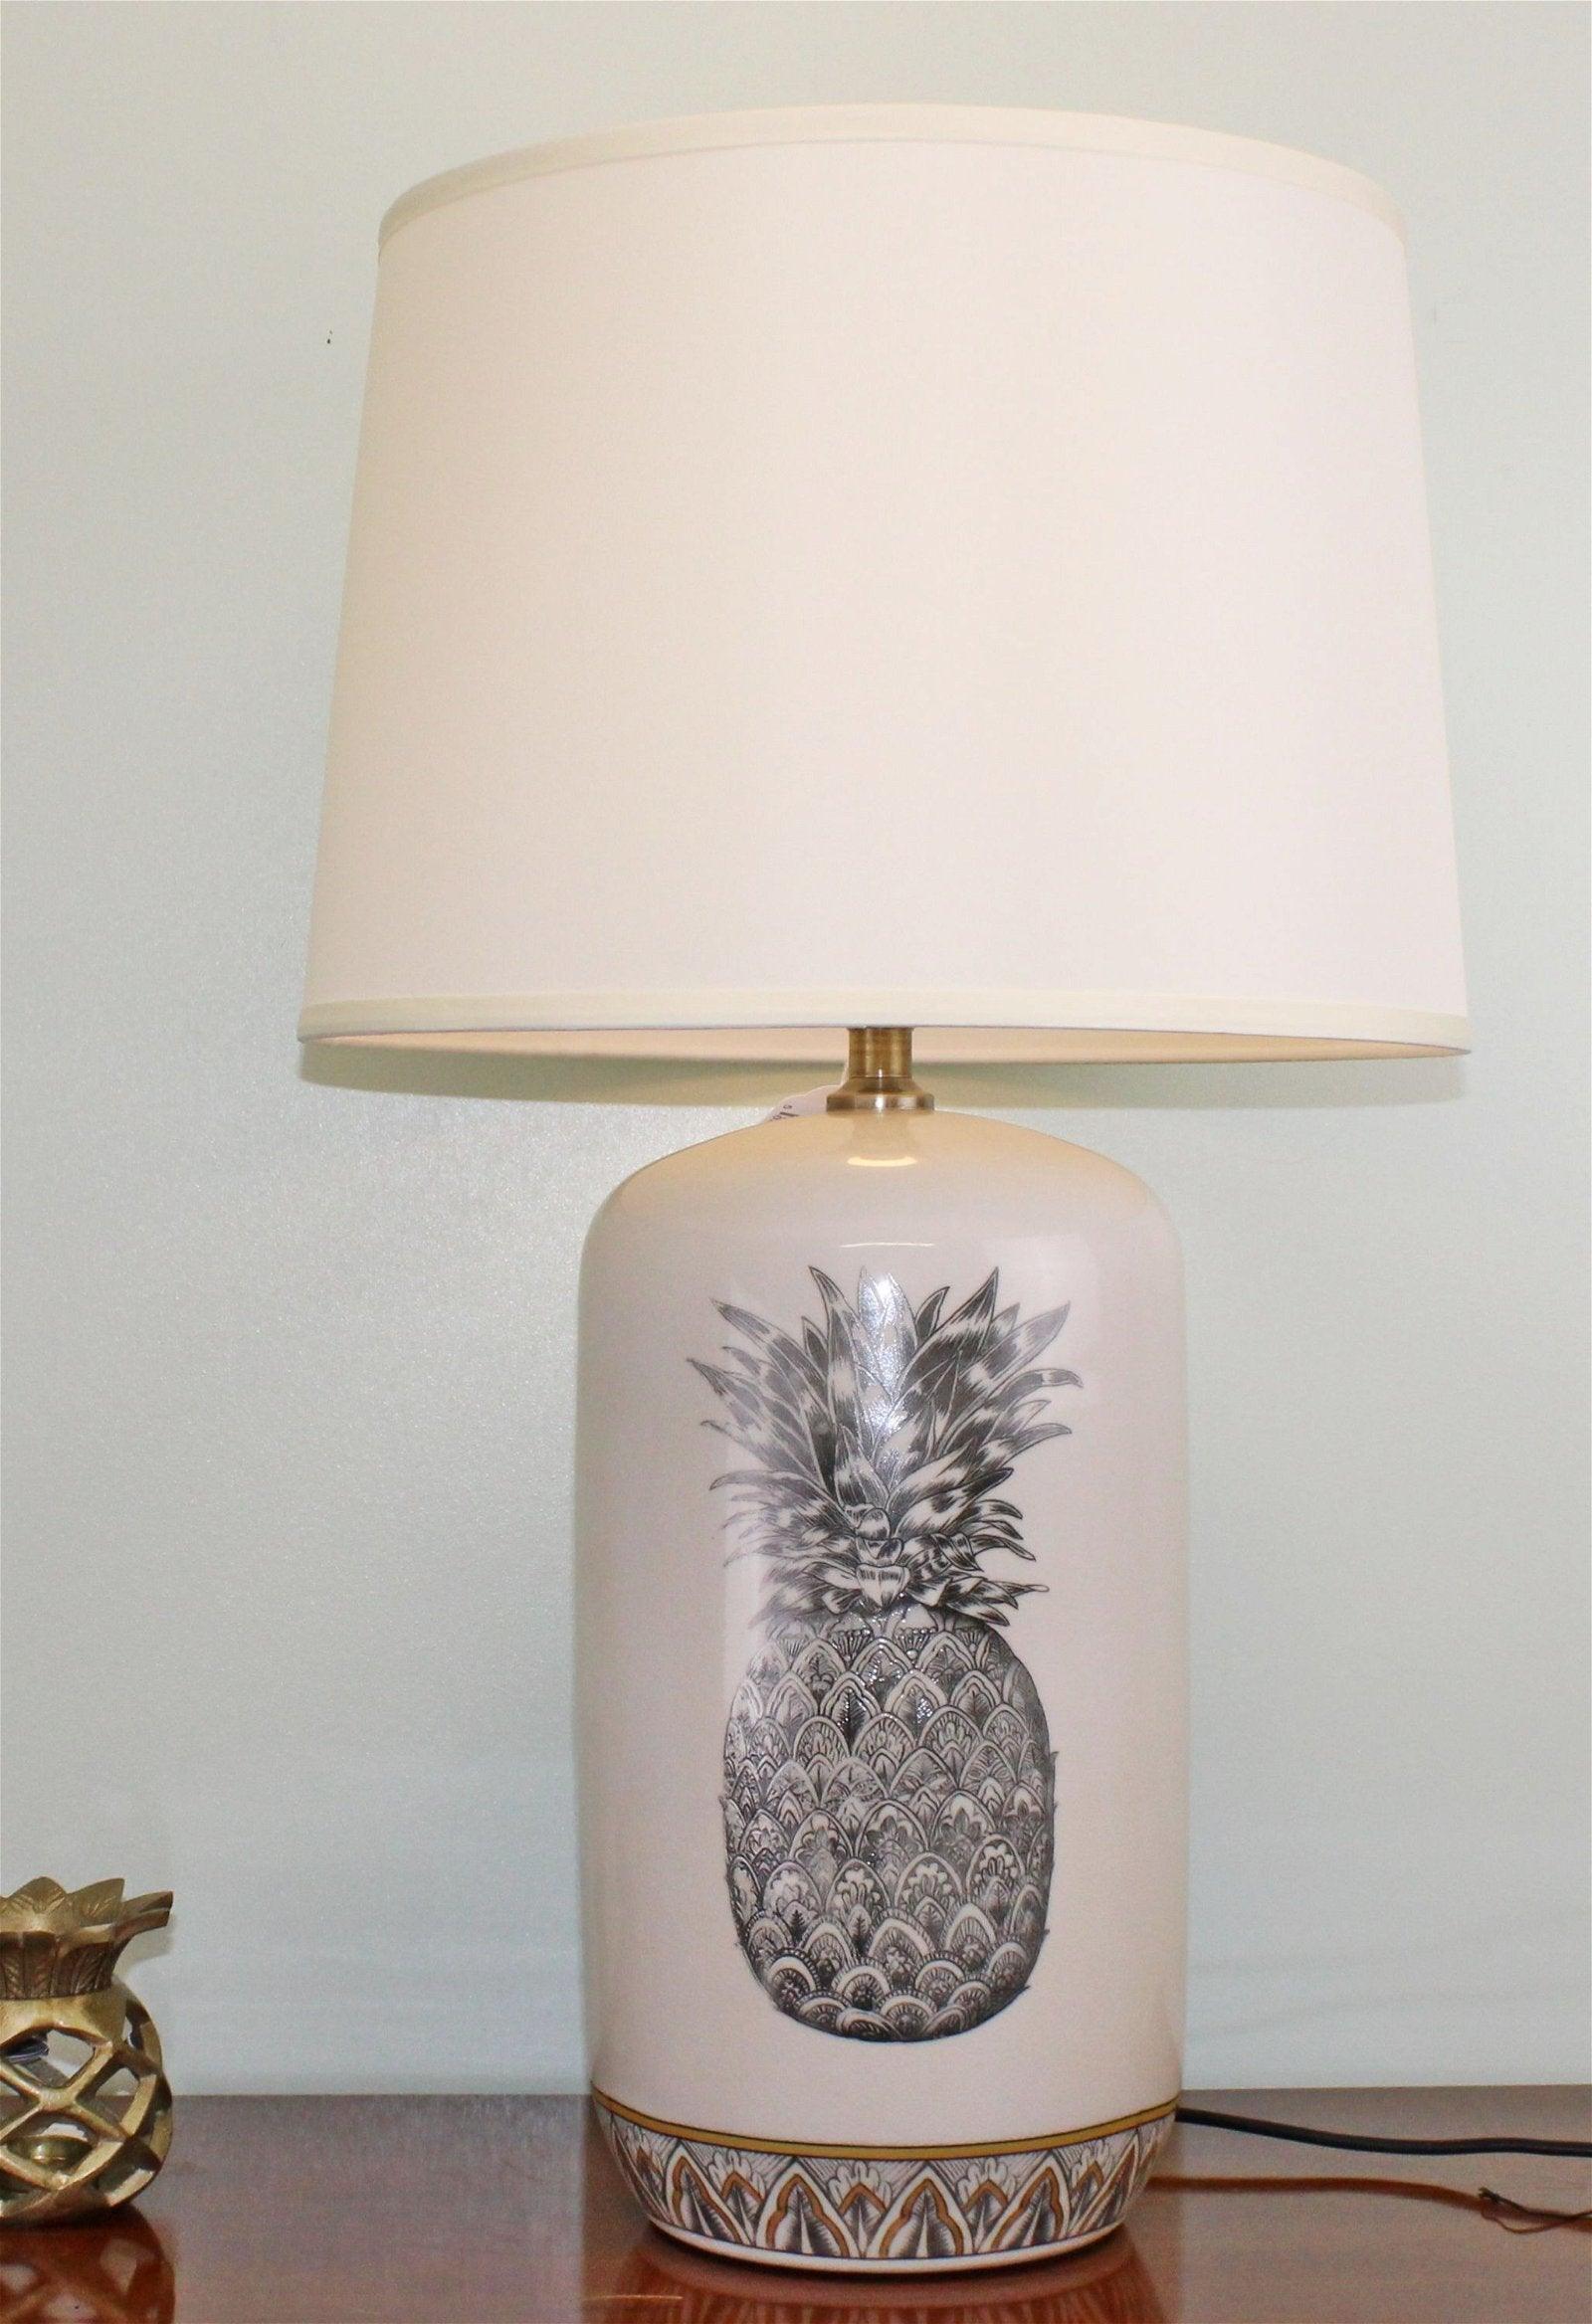 View Black White Ceramic Lamp with Pineapple Design 69cm information